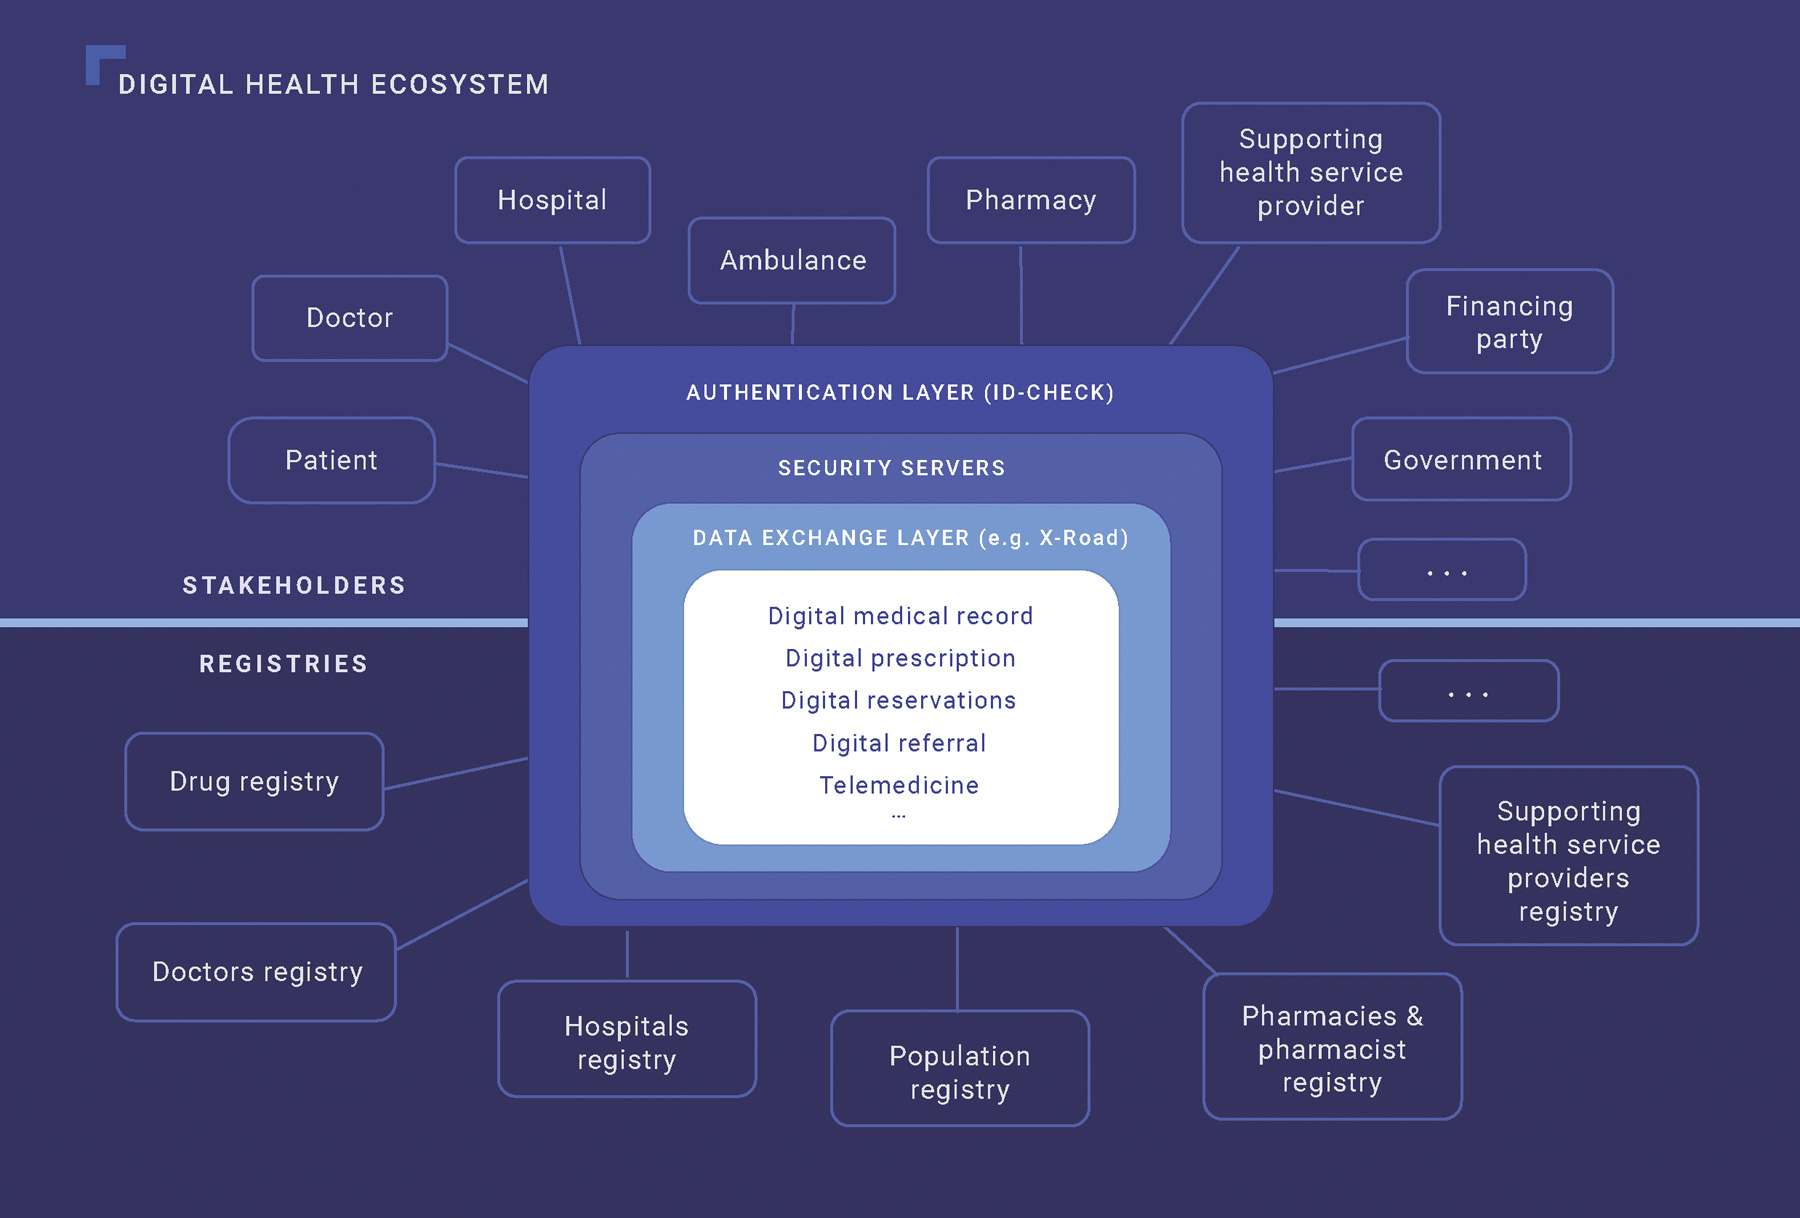 Digital Health Ecosystem